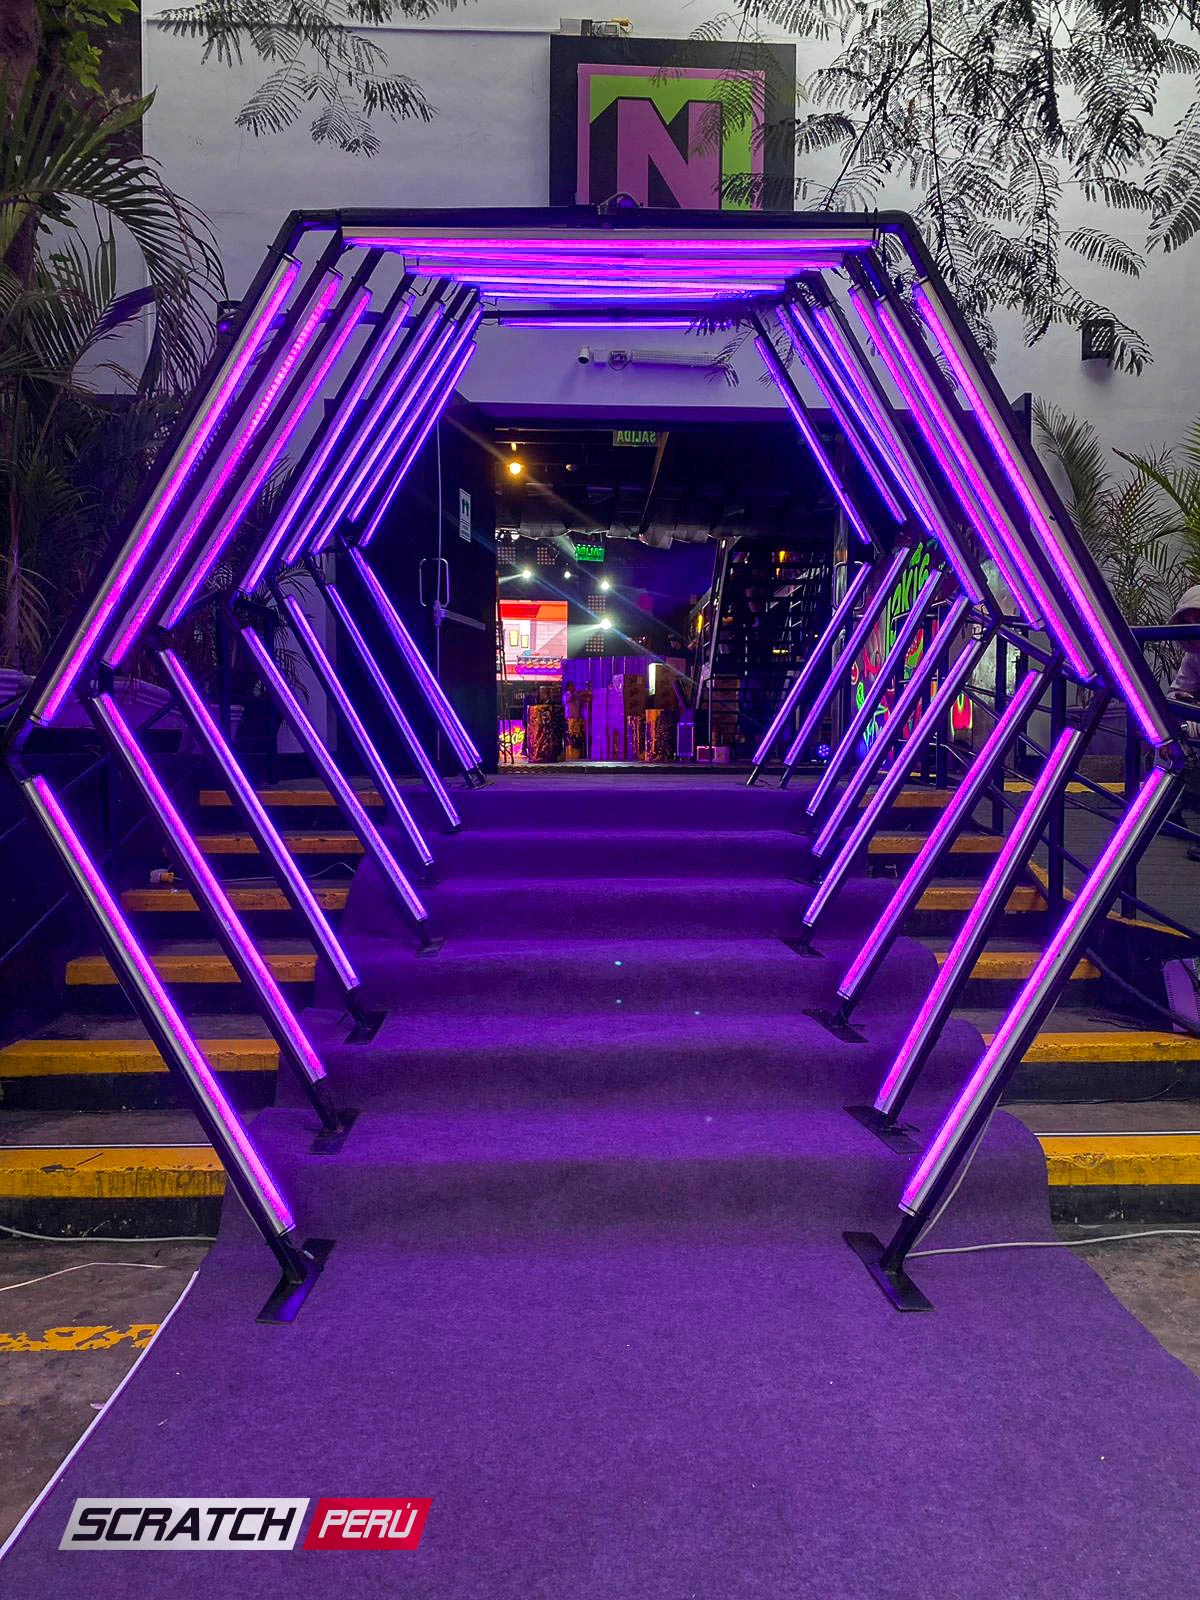 Túnel LED hexagonal violeta: Entrada encantadora en escaleras hacia un evento, con iluminación violeta cautivadora. - Túnel hexagonal led - scratch perú.